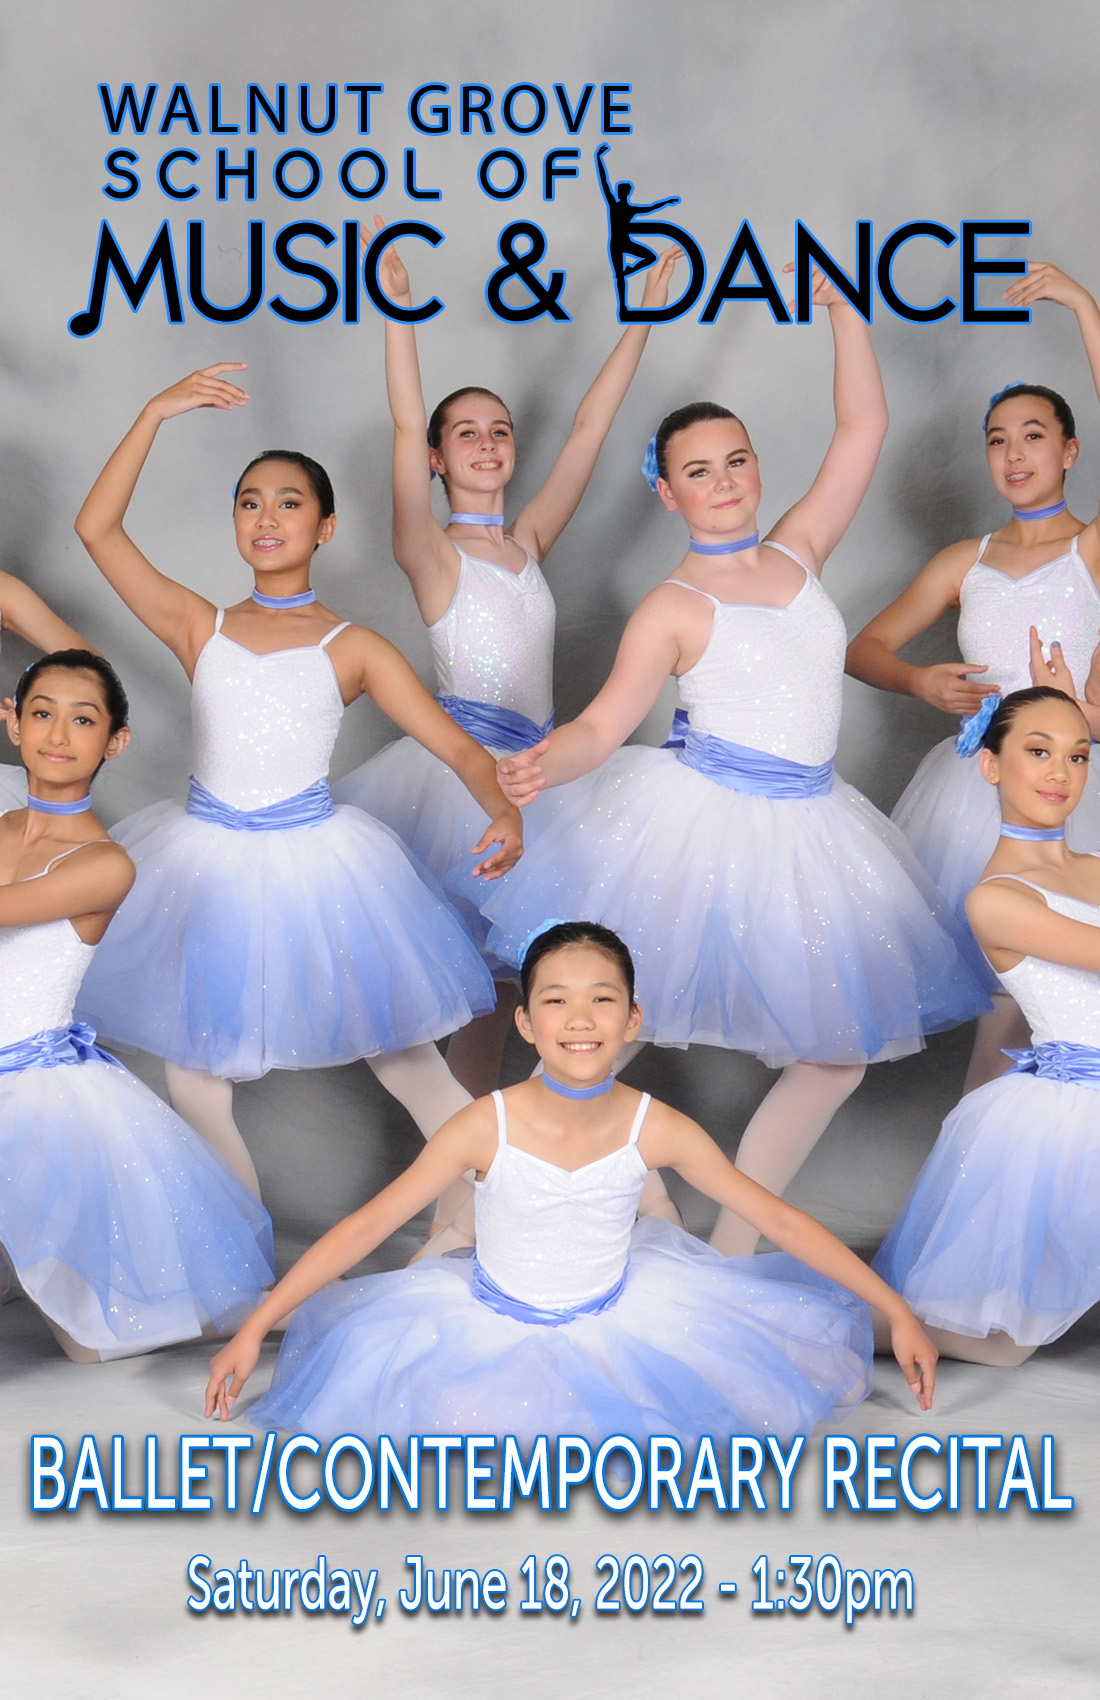 Walnut Grove School of Music & Dance - 2022 Ballet/Contemporary Recital